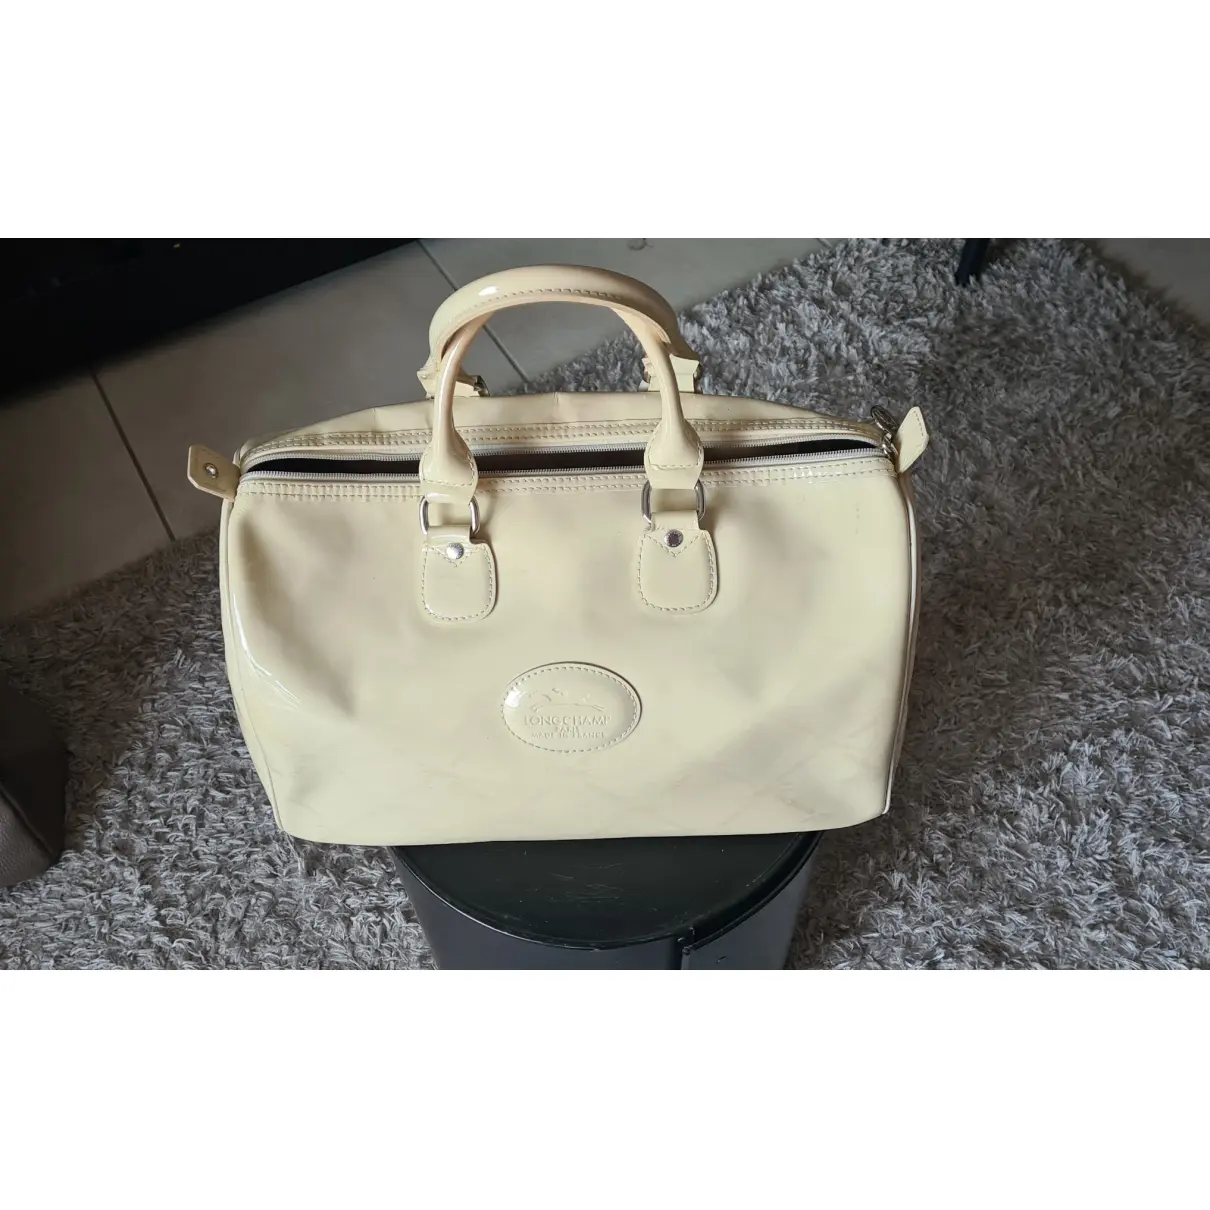 Buy Longchamp Patent leather handbag online